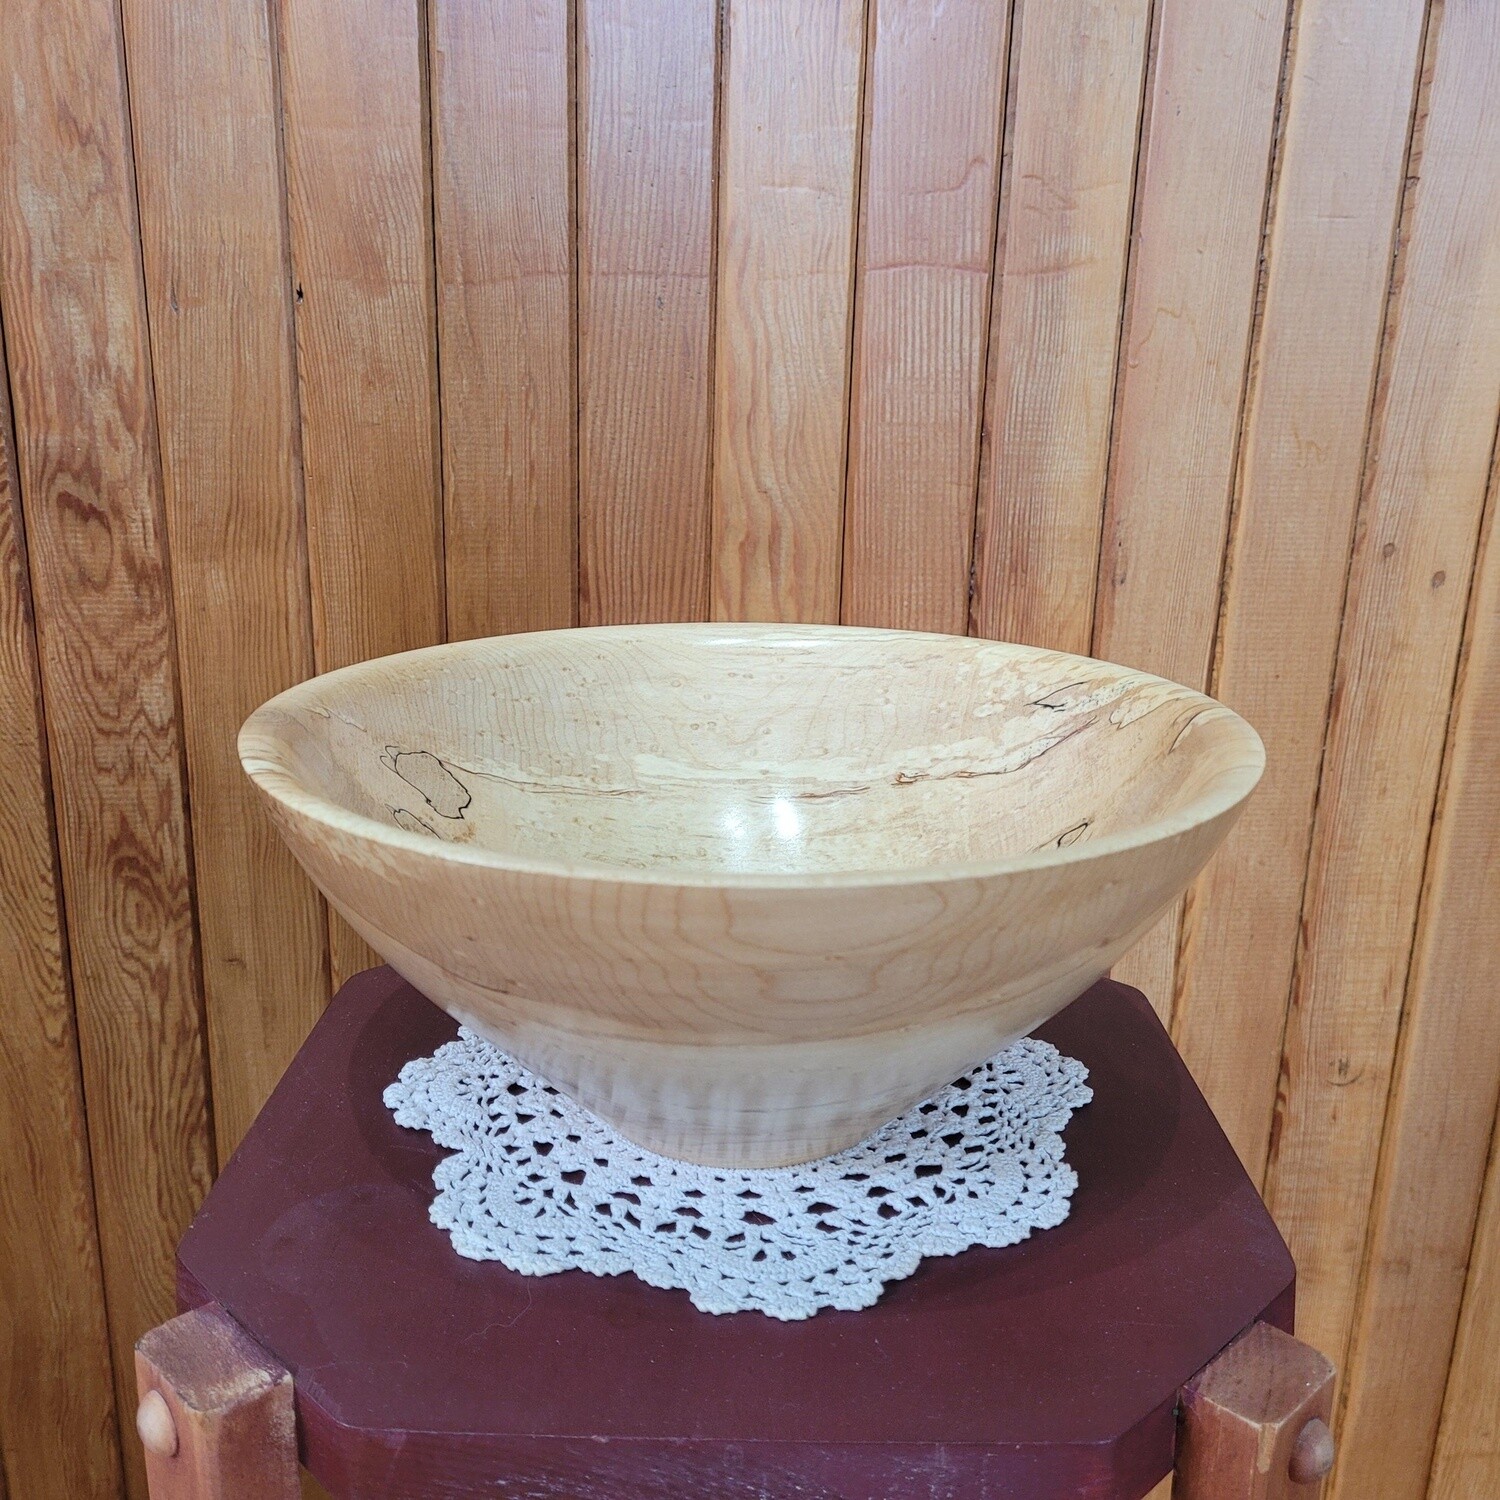 Sparlted birdseye maple bowl / Bol en érable piqué